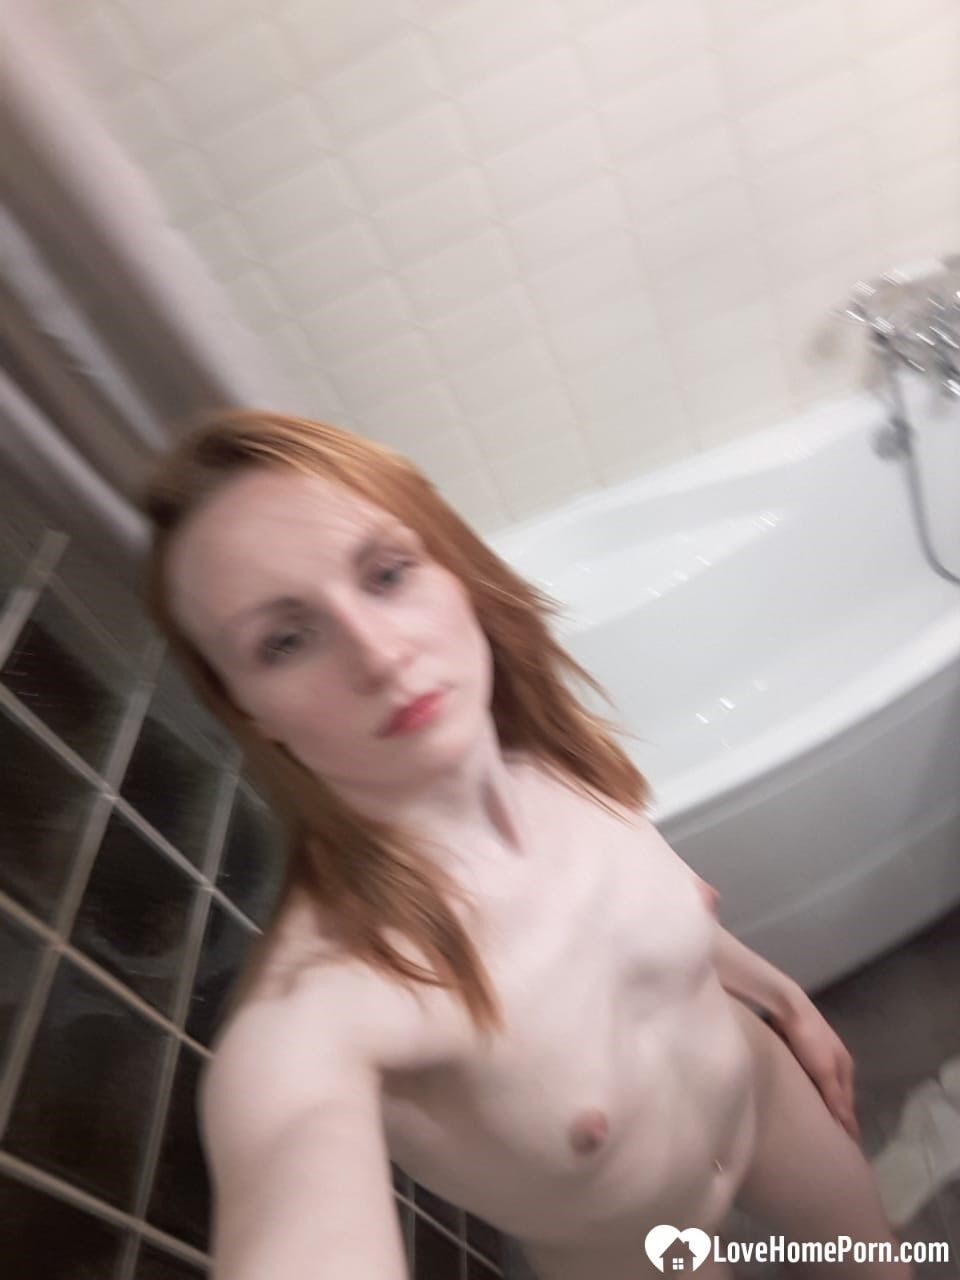 Skinny redhead girl posing in her bathroom naked #21